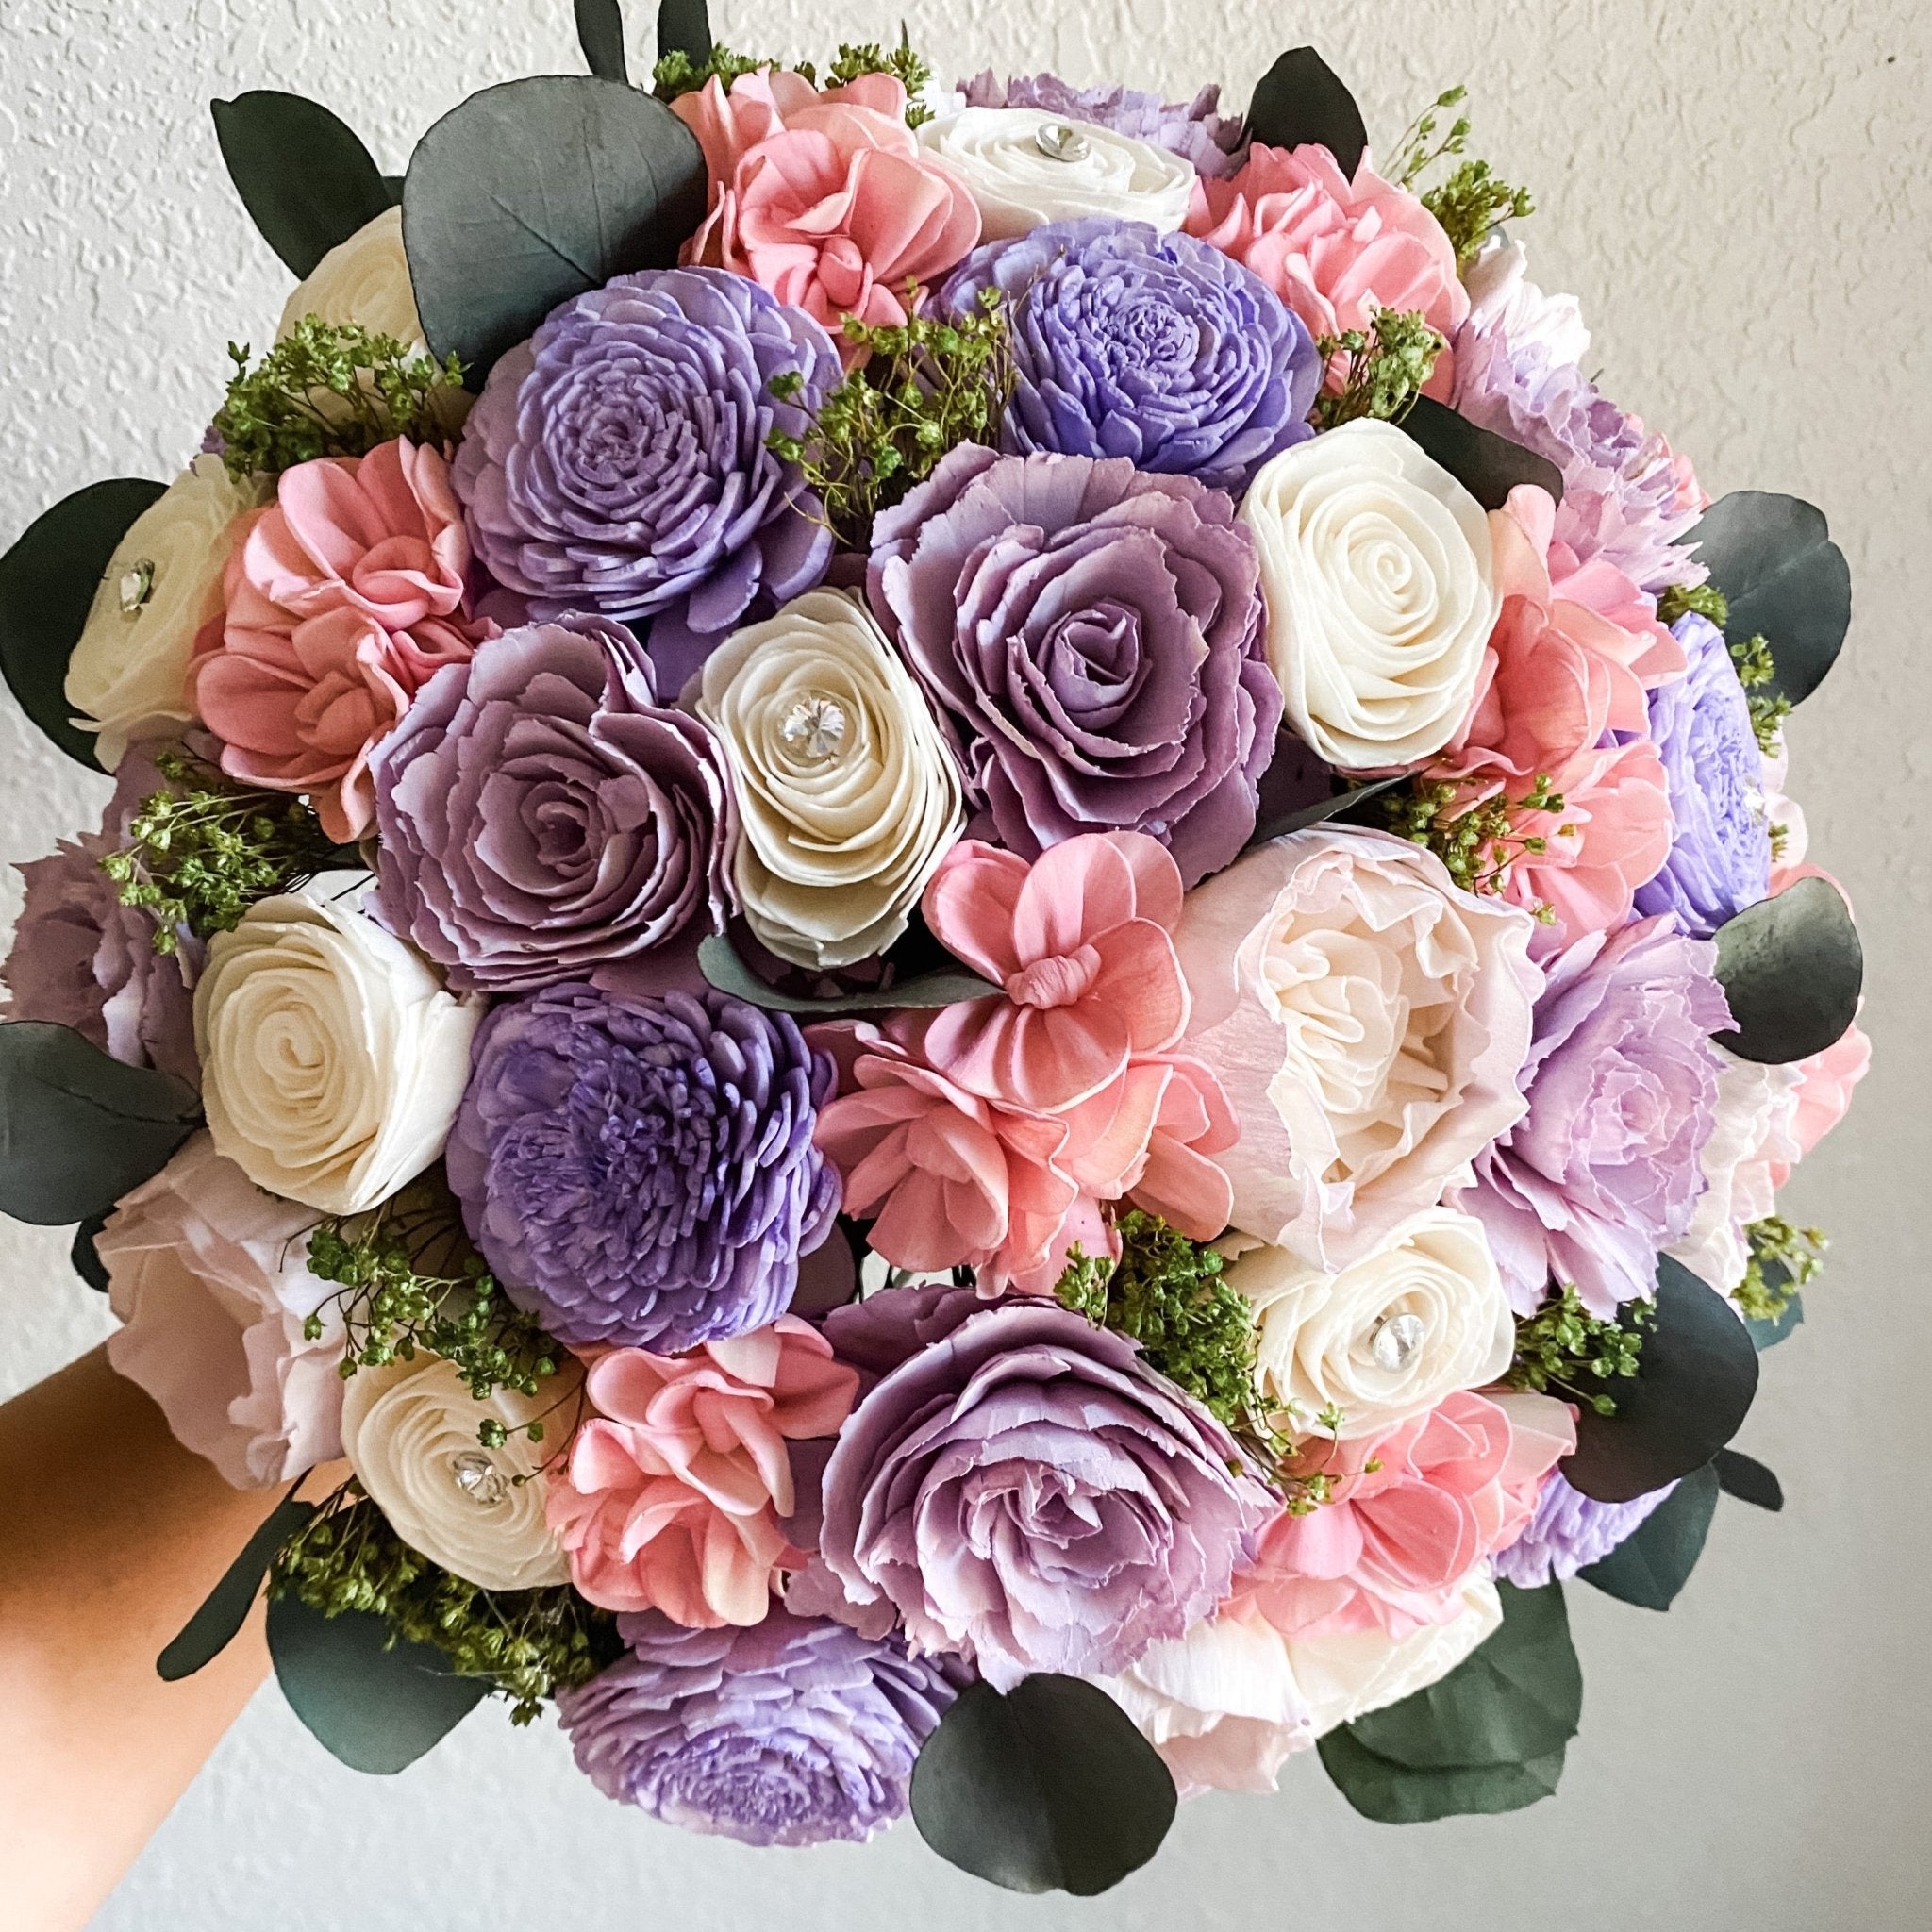 Spring Garden Bouquet fro Weddings or Quinceañeras - PapiroExtra Large 12&quot; Bride